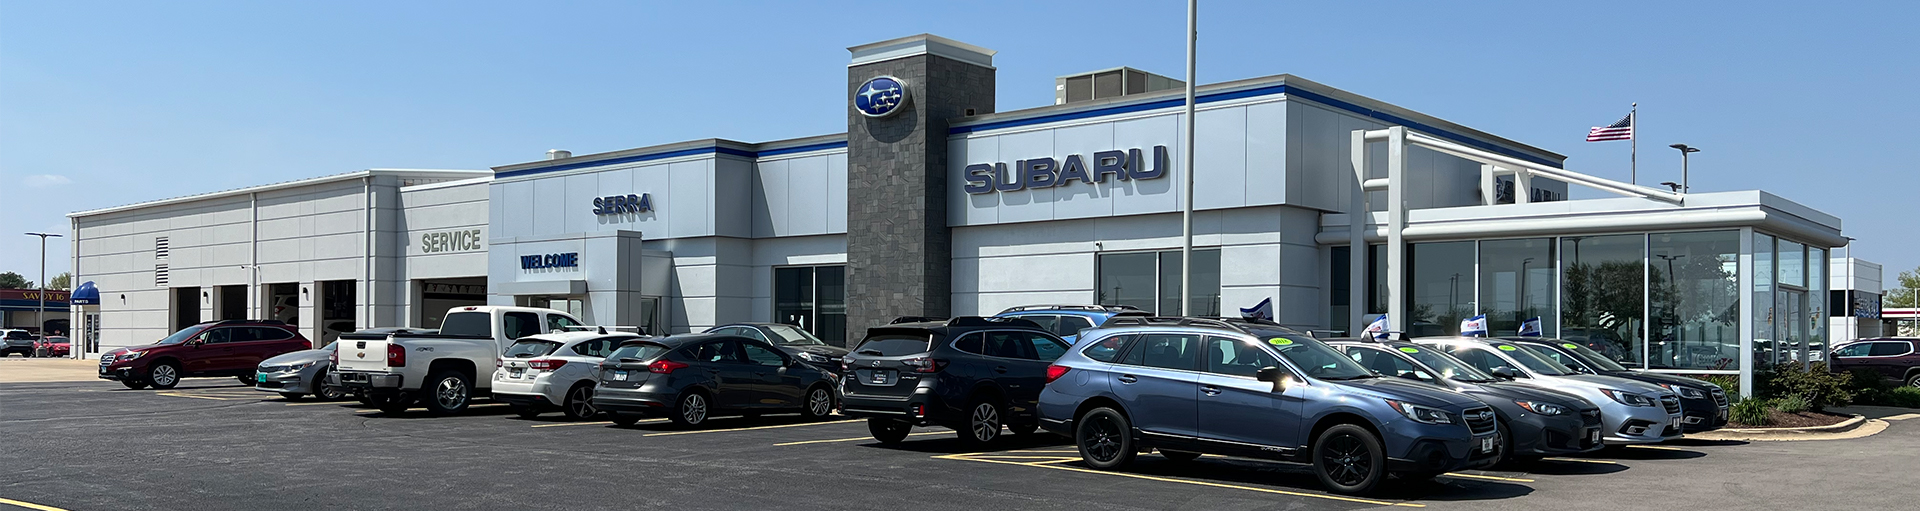 Subaru HVAC Services